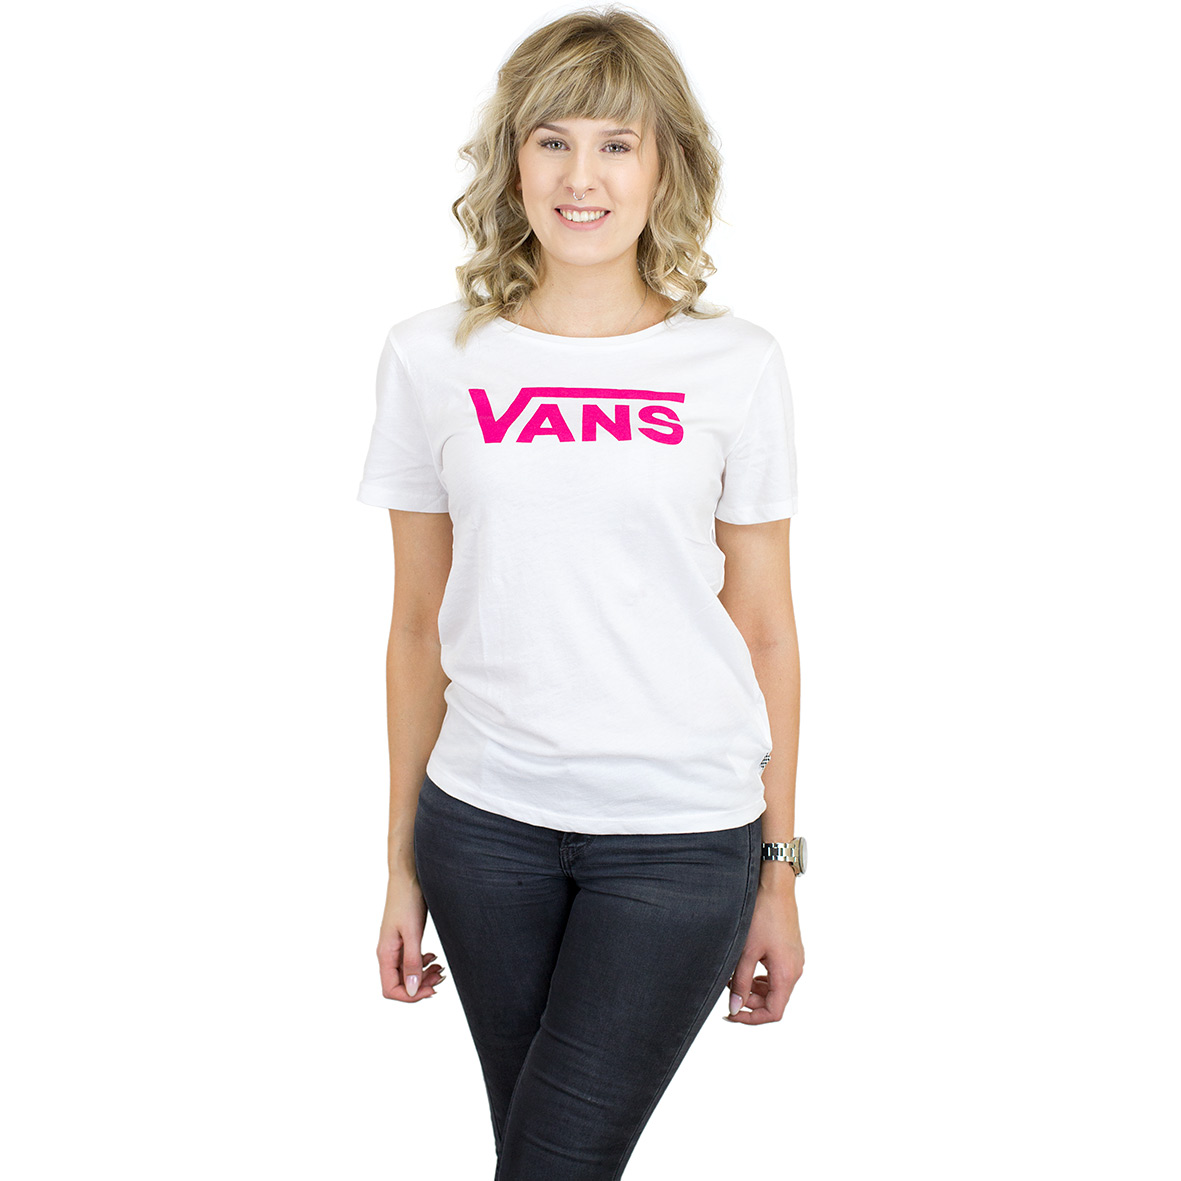 Schildknaap apotheek Kindercentrum ☆ Vans Damen T-Shirt Flying V weiß/pink - hier bestellen!